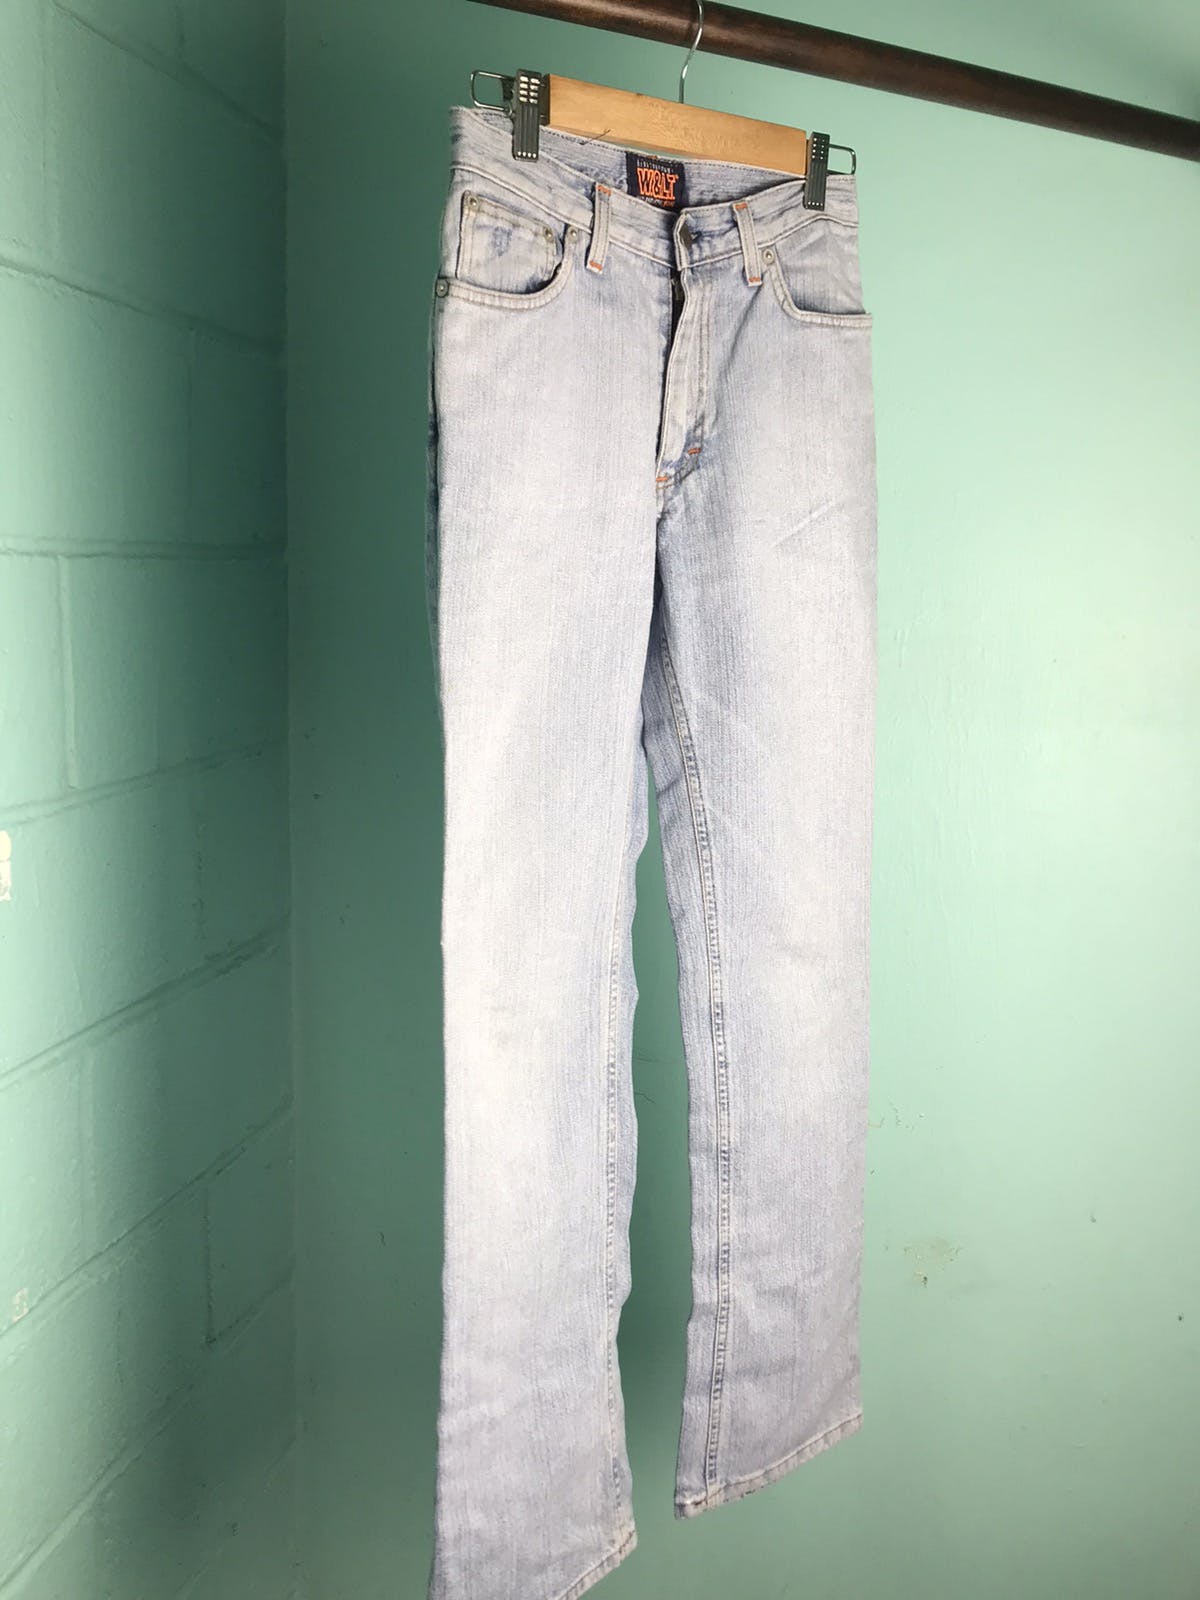 Vintage W&lt Denim Jeans - 2